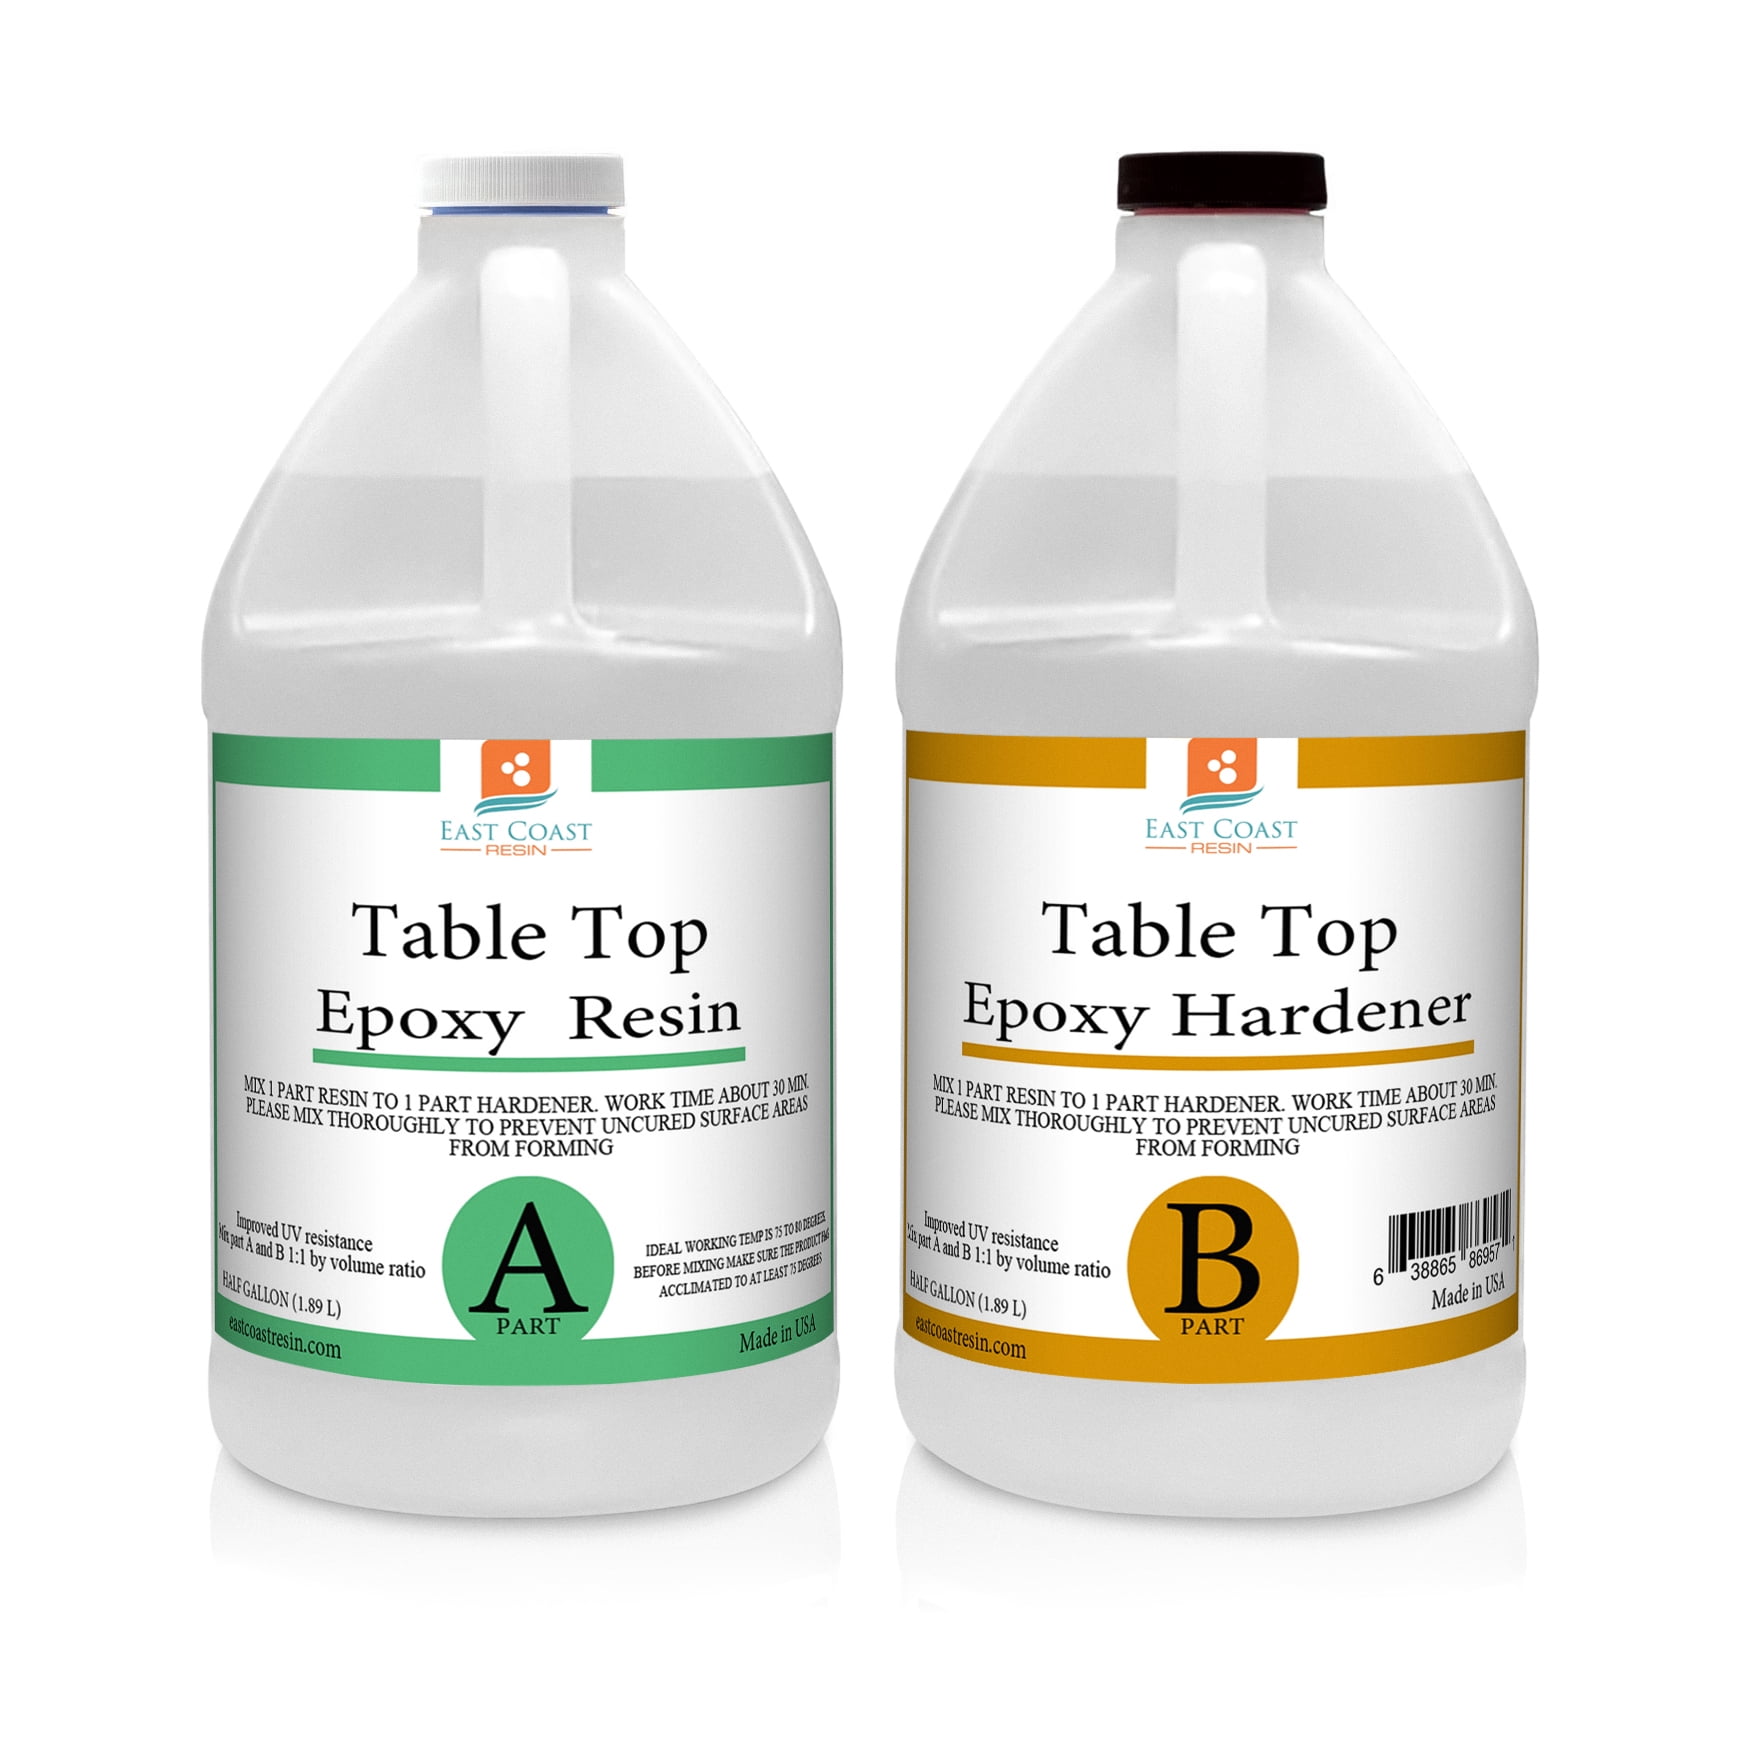 Upstart Epoxy Resin - 5 Gallon Bundle - Crystal Clear Tabletop